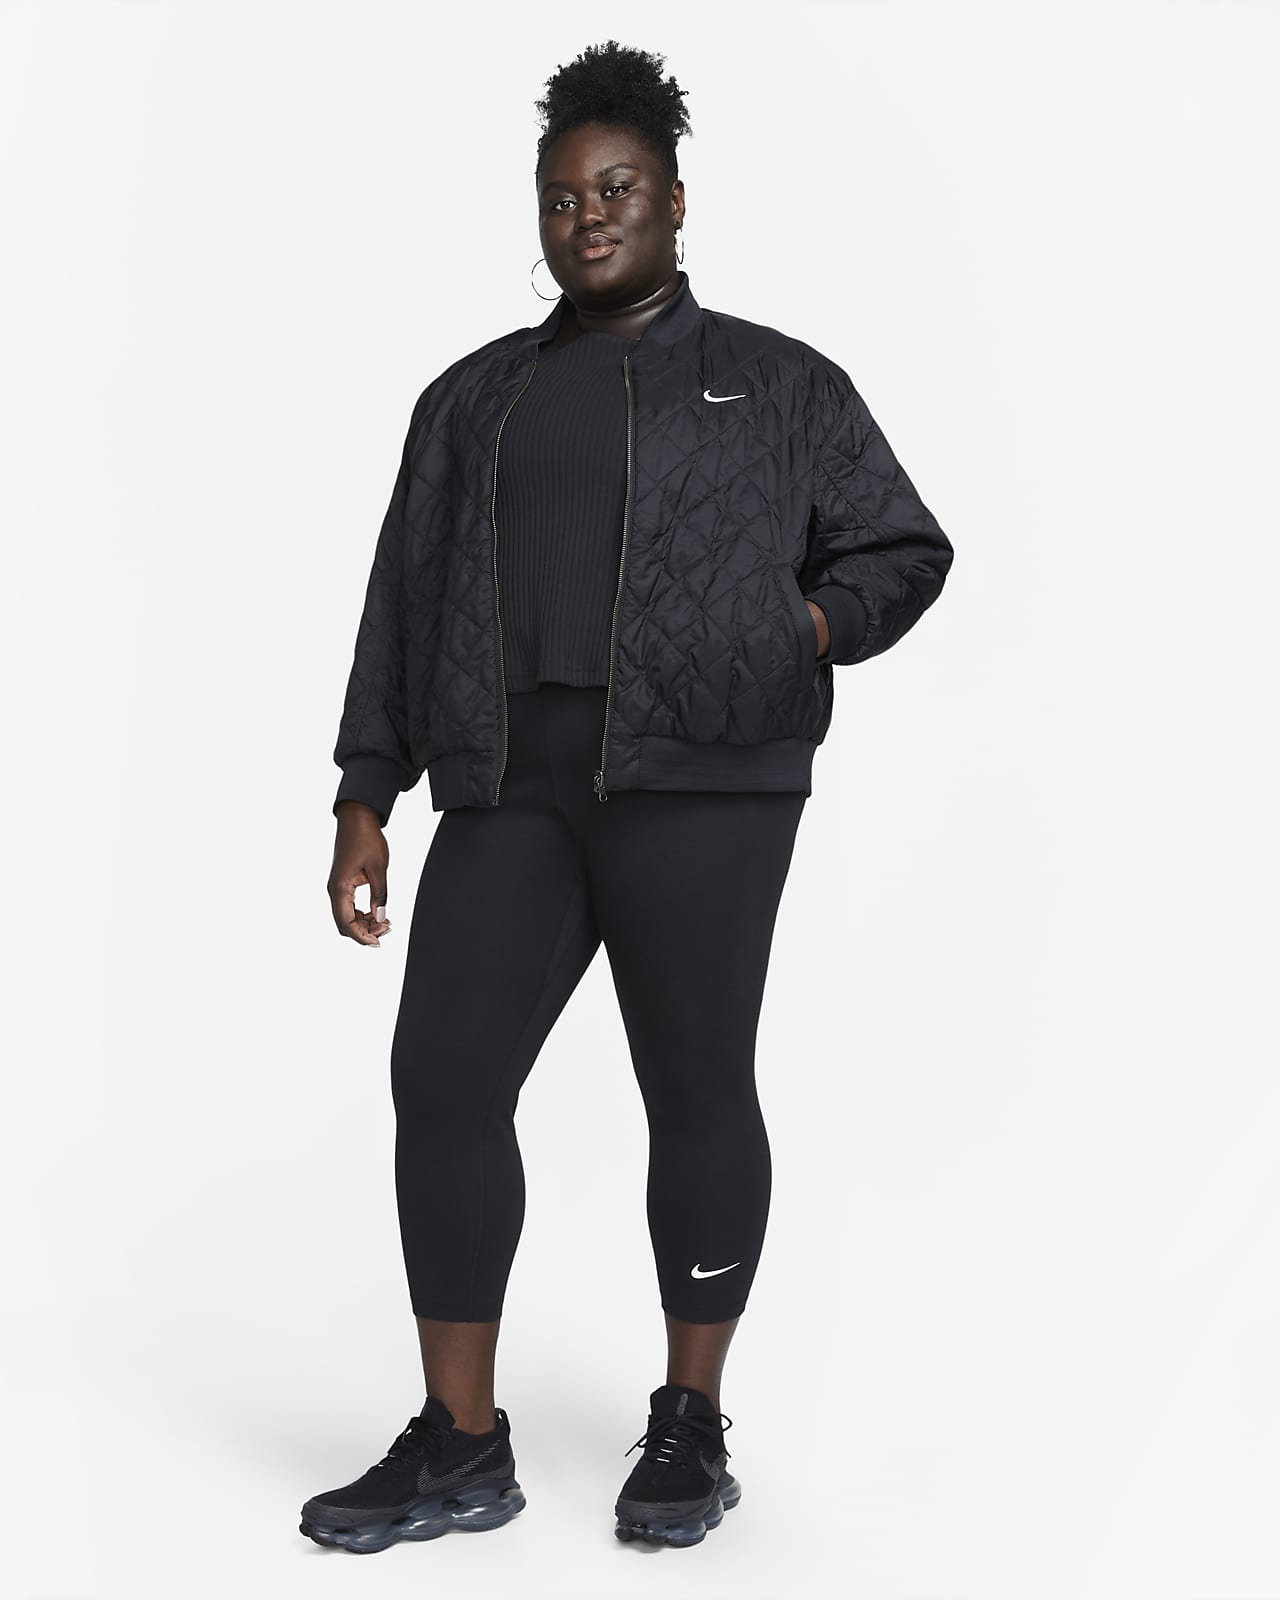 Nike Women's Sportswear Air Logo Taped 7/8 HR Leggings Size XS